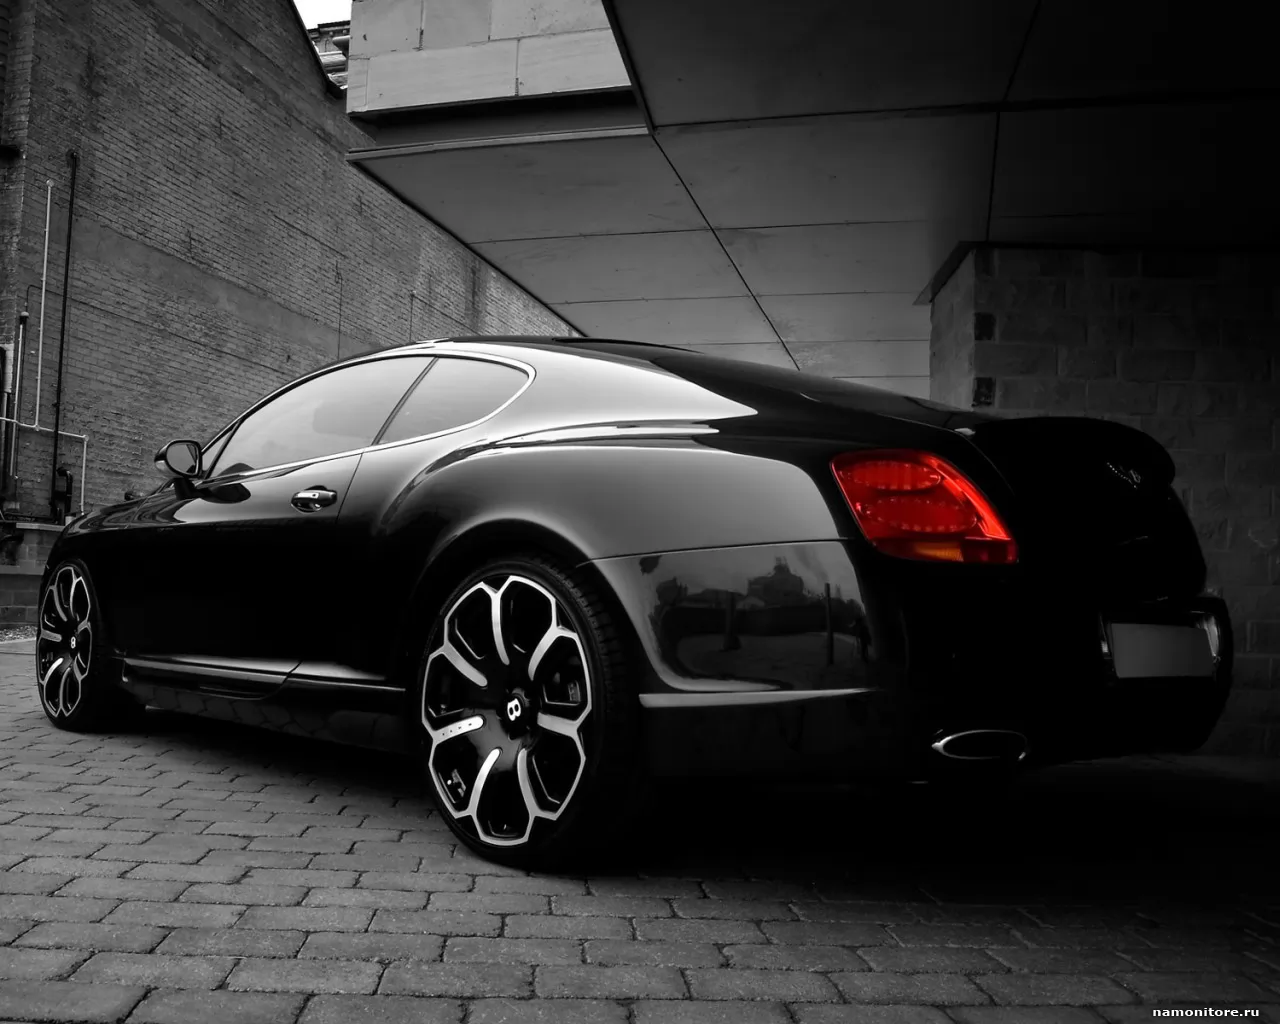 Bentley Continental GTS Black Edition, Bentley, автомобили, лучшее, техника, чёрное х